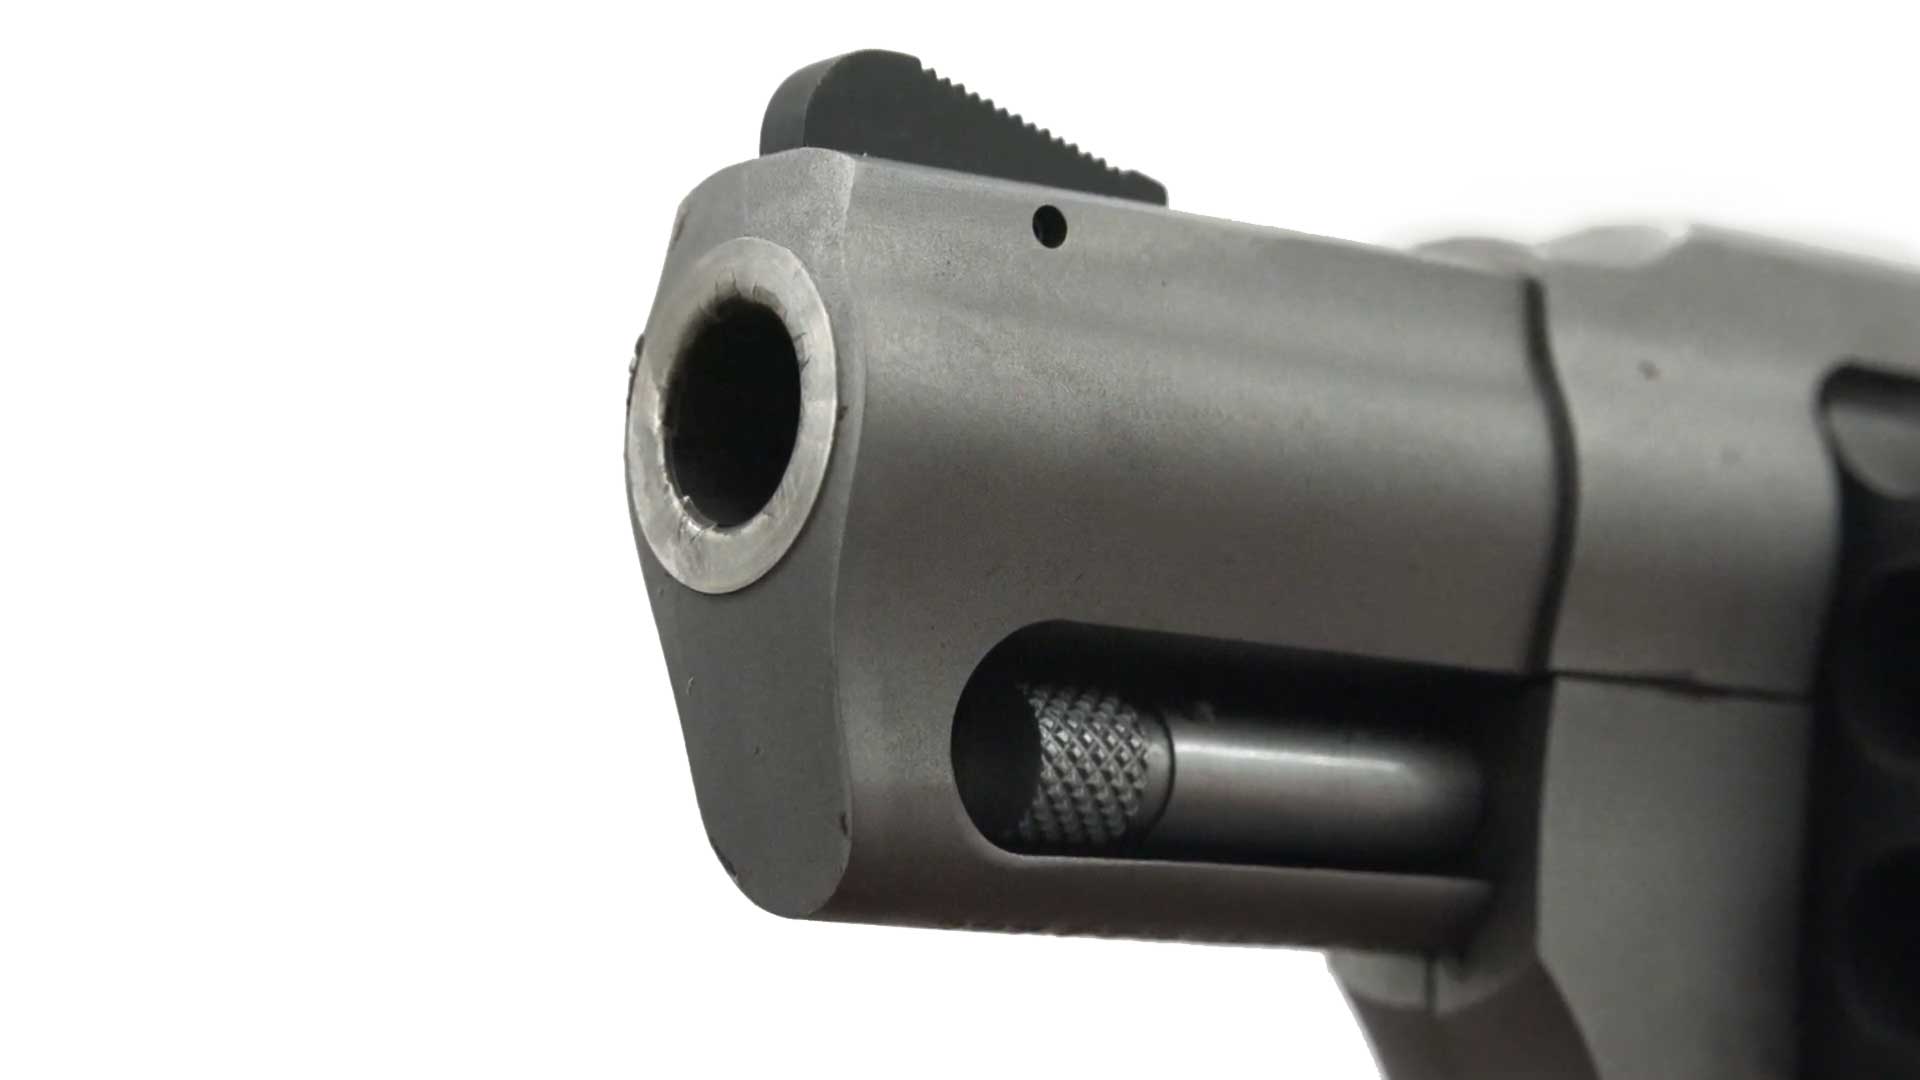 Taurus USA 327 revolver muzzle barrel bore gun left-side view stainless steel metal